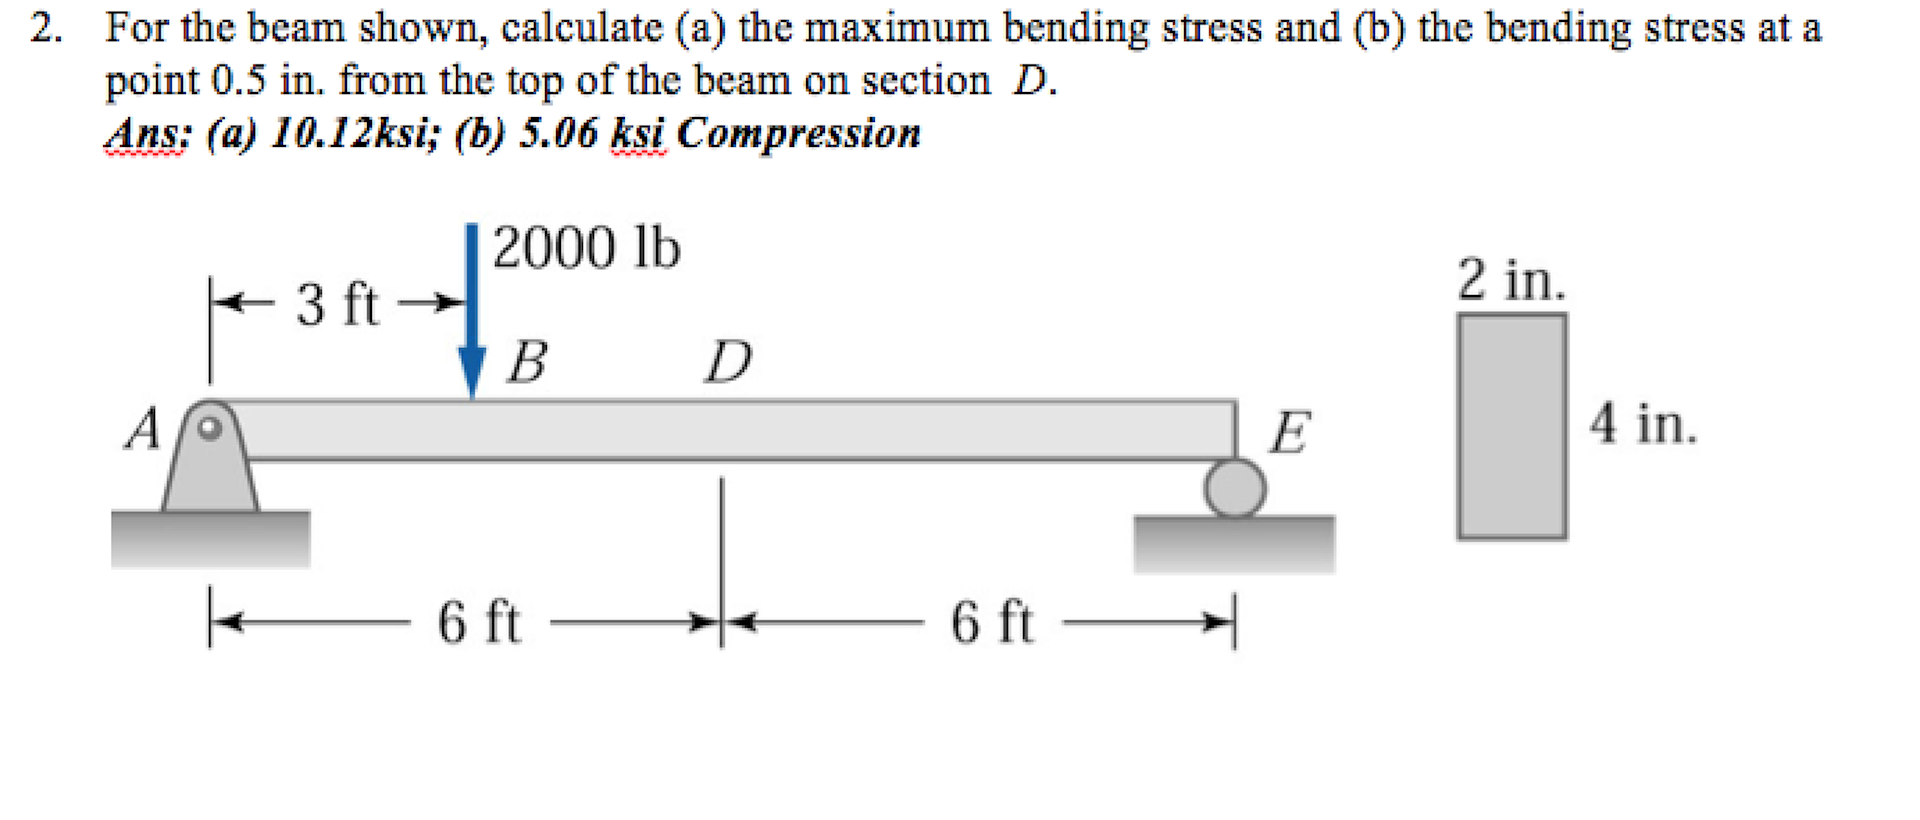 square tube bending stress calculator